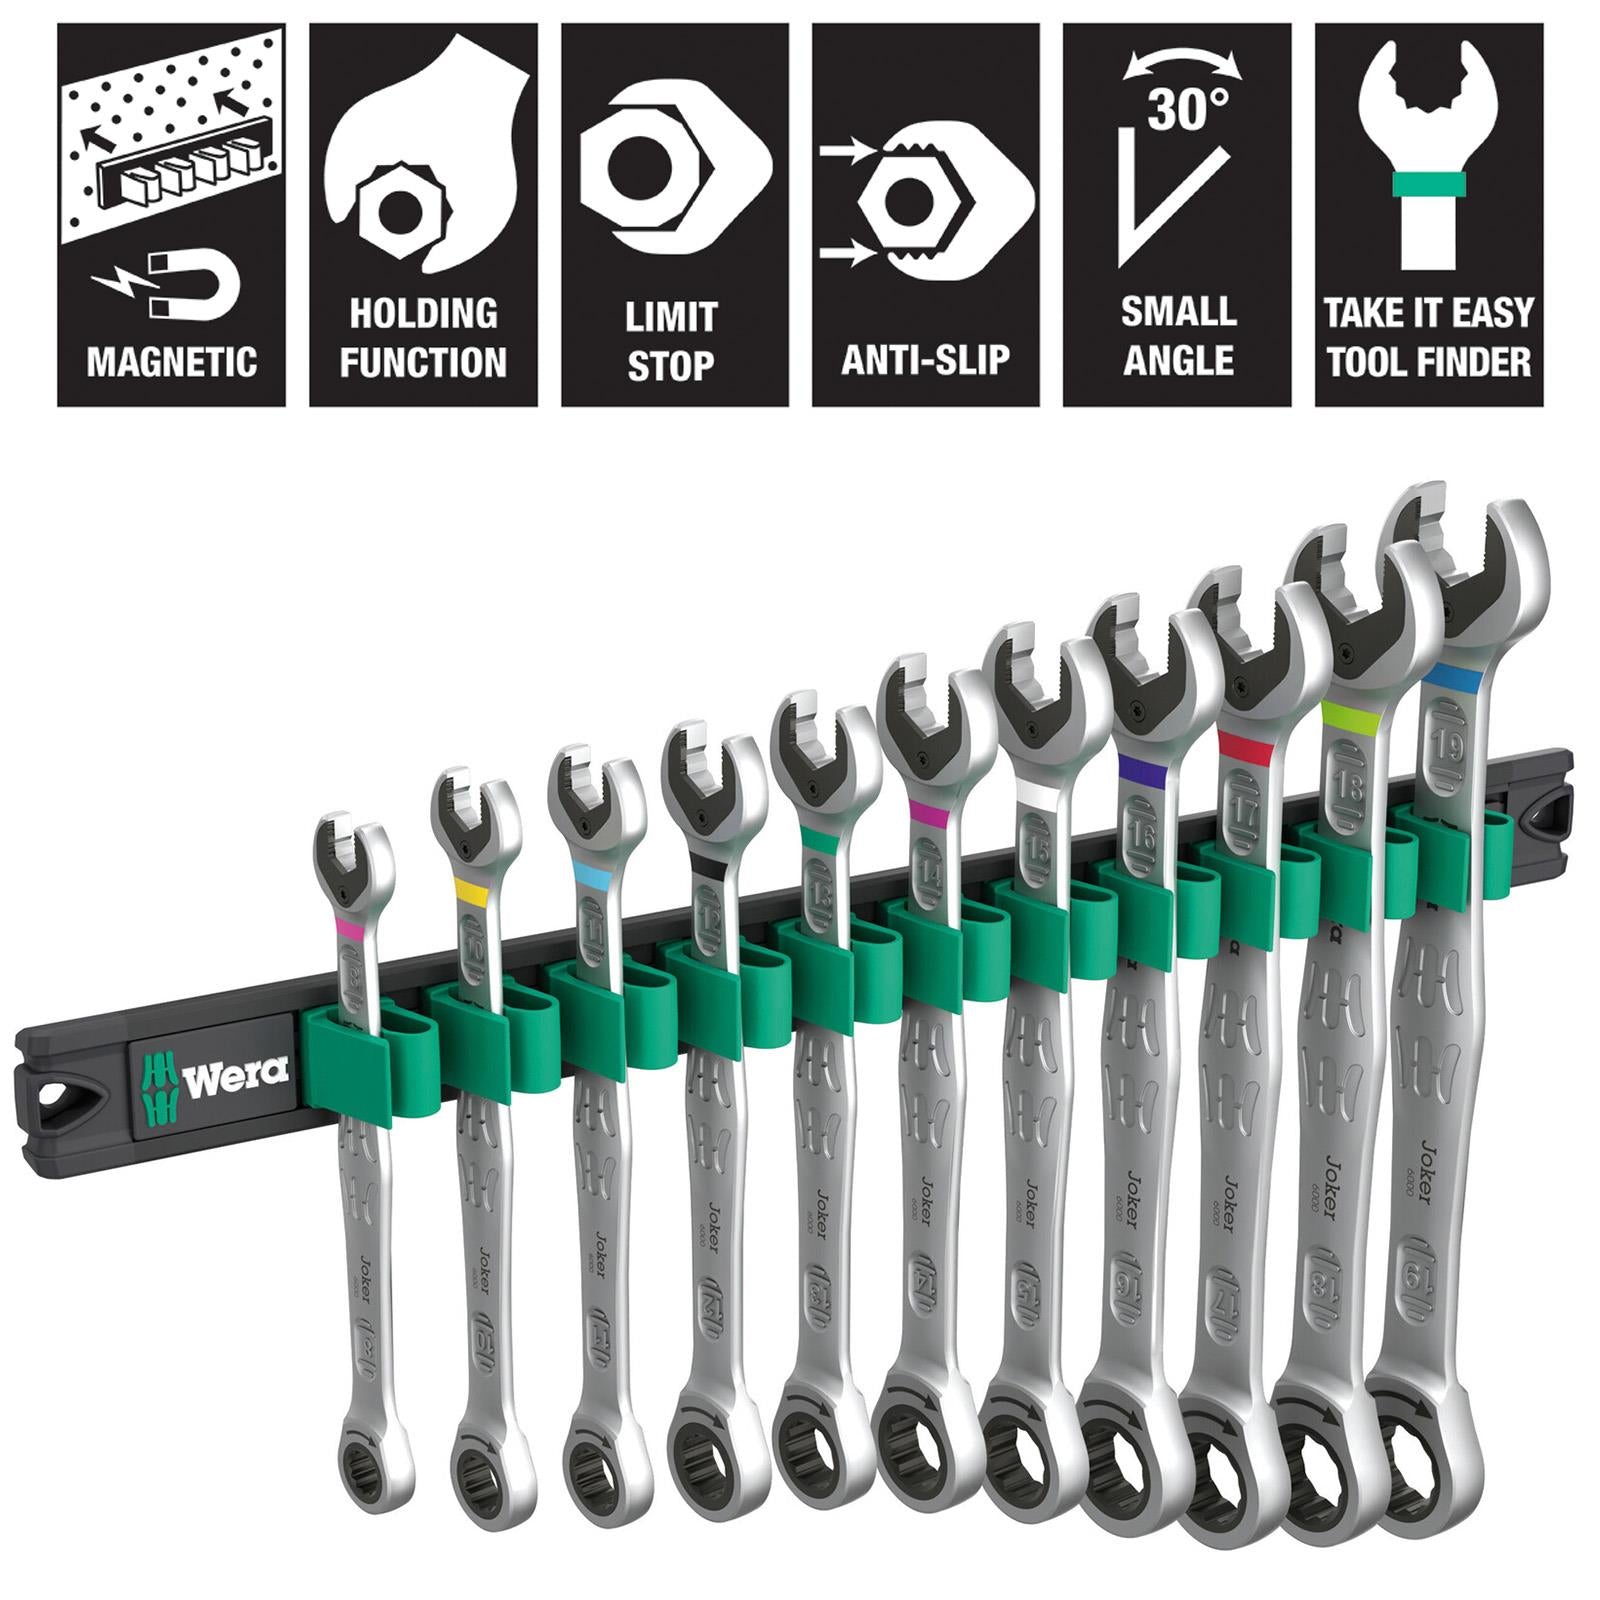 Wera Ratchet Combination Spanner Wrench Set 6000 Joker 1 9630 Magnetic Rail 11 Pieces 8-19mm